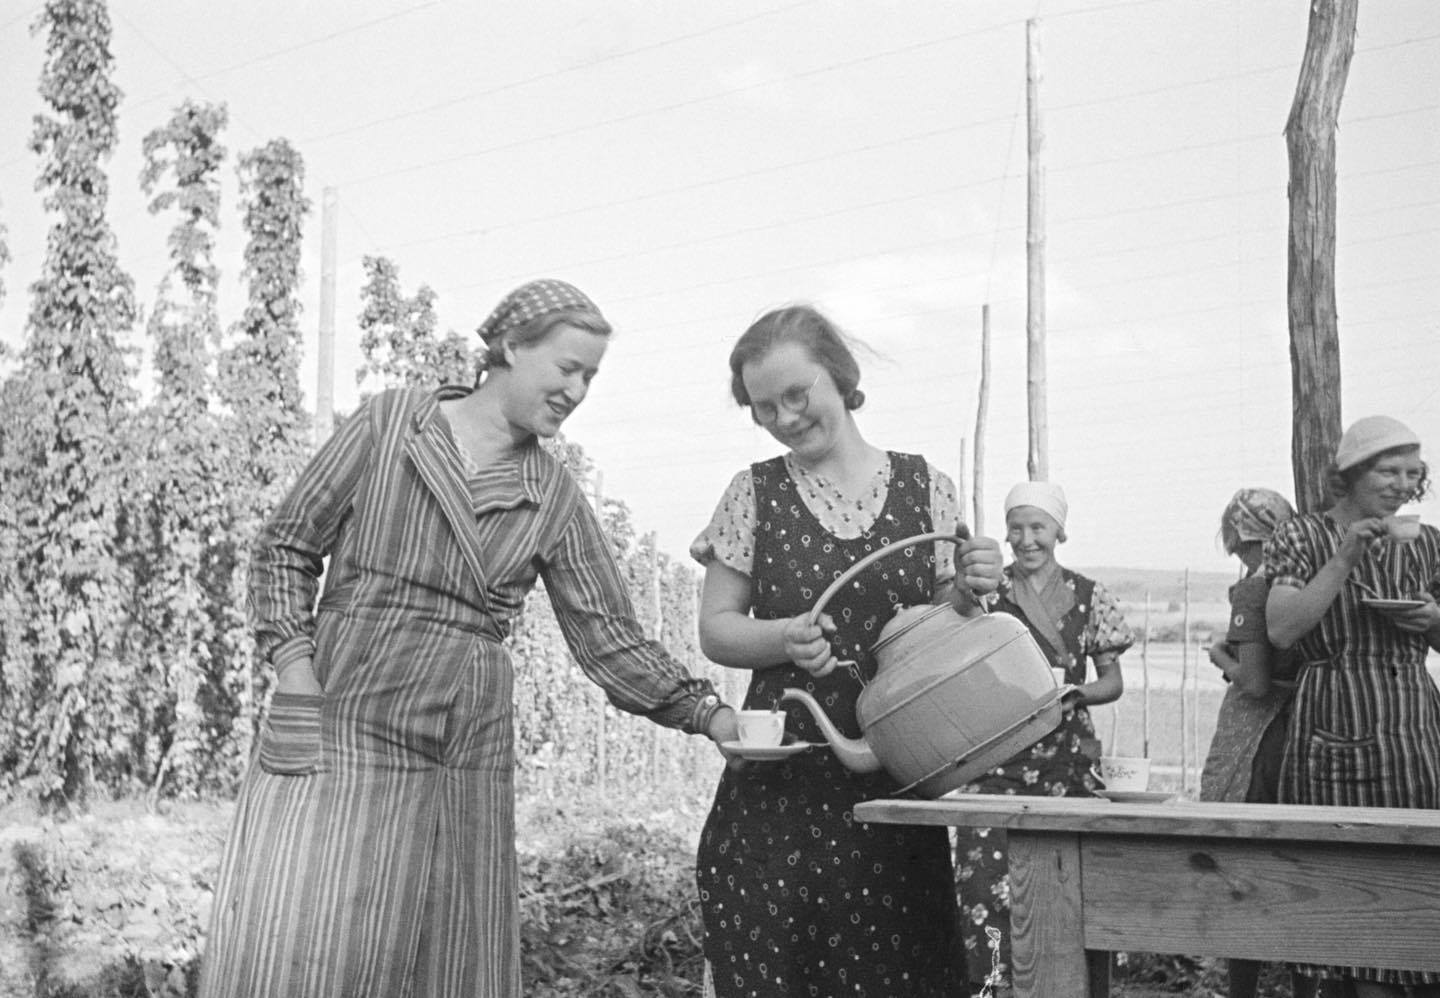 Kaffepaus humleplockning i närheten av Näsum, Skåne en sensommardag 1937 NM.jpg